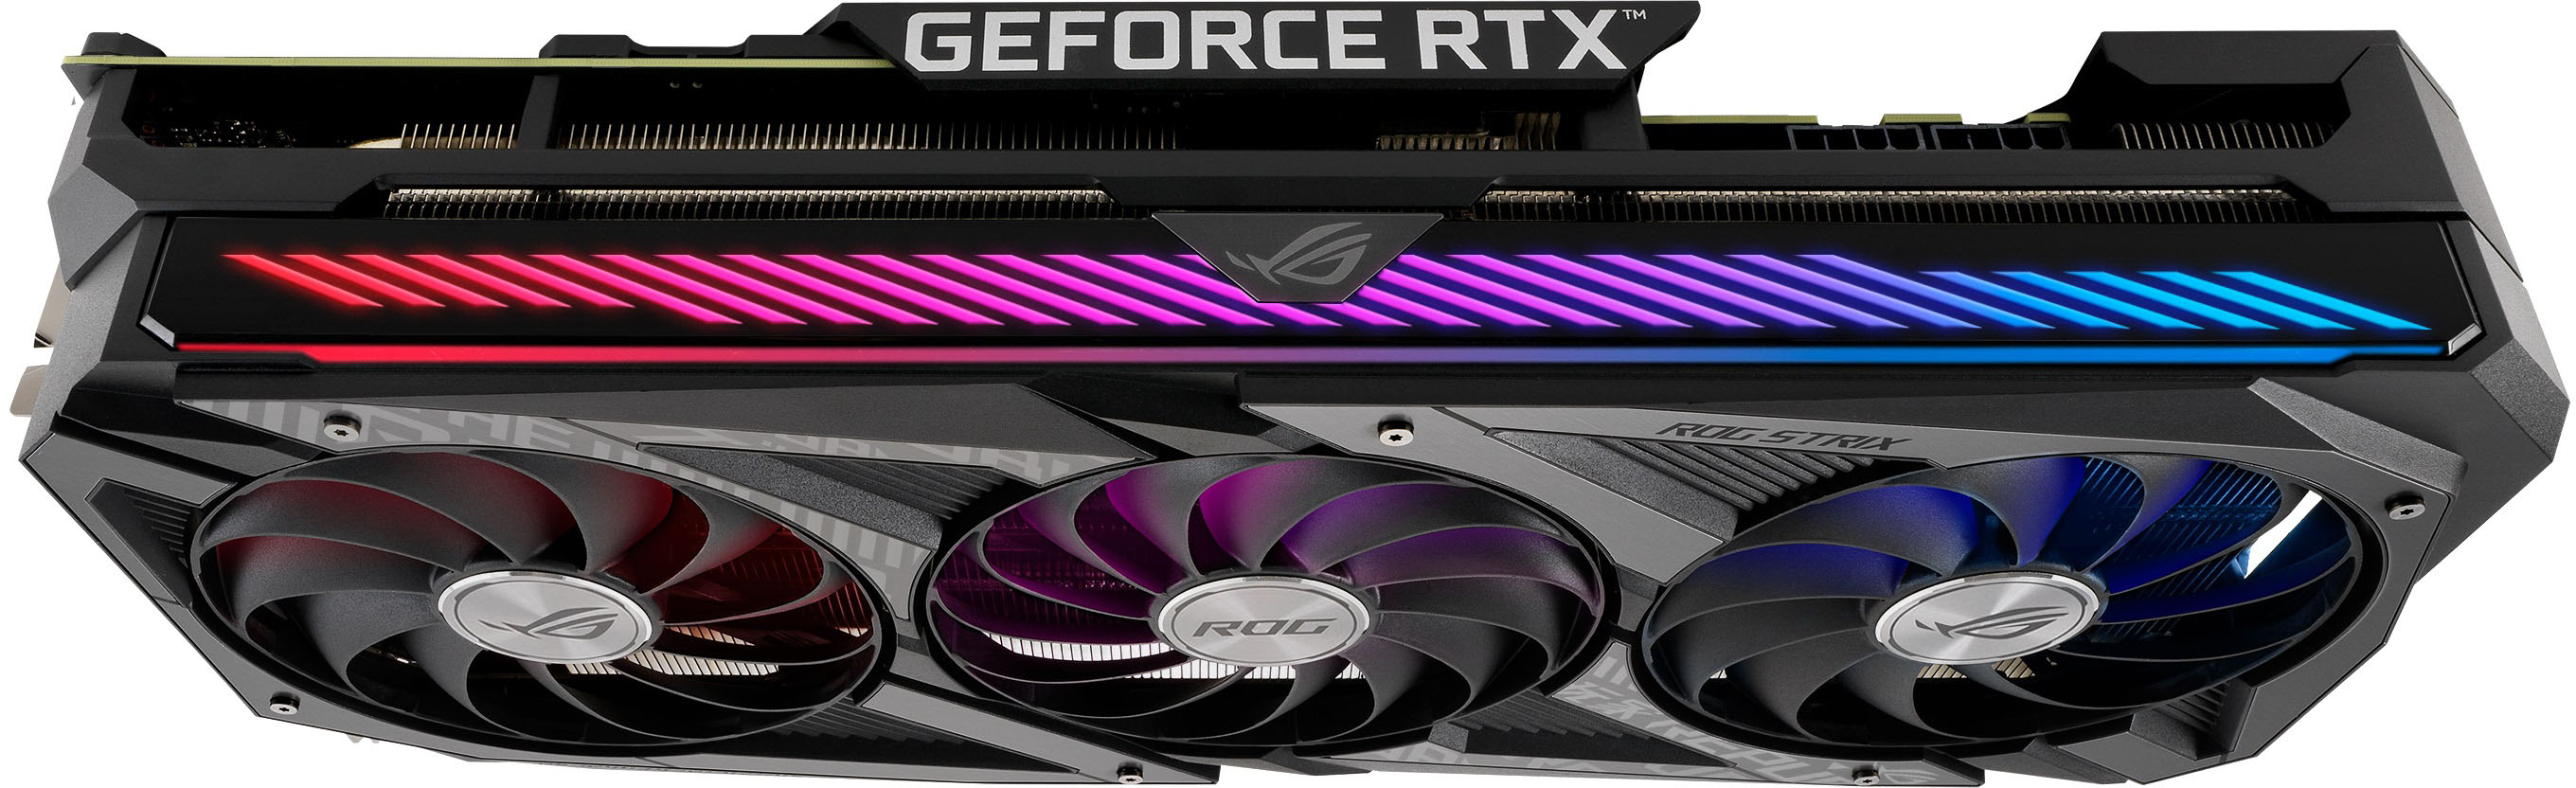 Best Buy: ASUS NVIDIA GeForce RTX 3070 V2 ROG Strix 8GB GDDR6 PCI